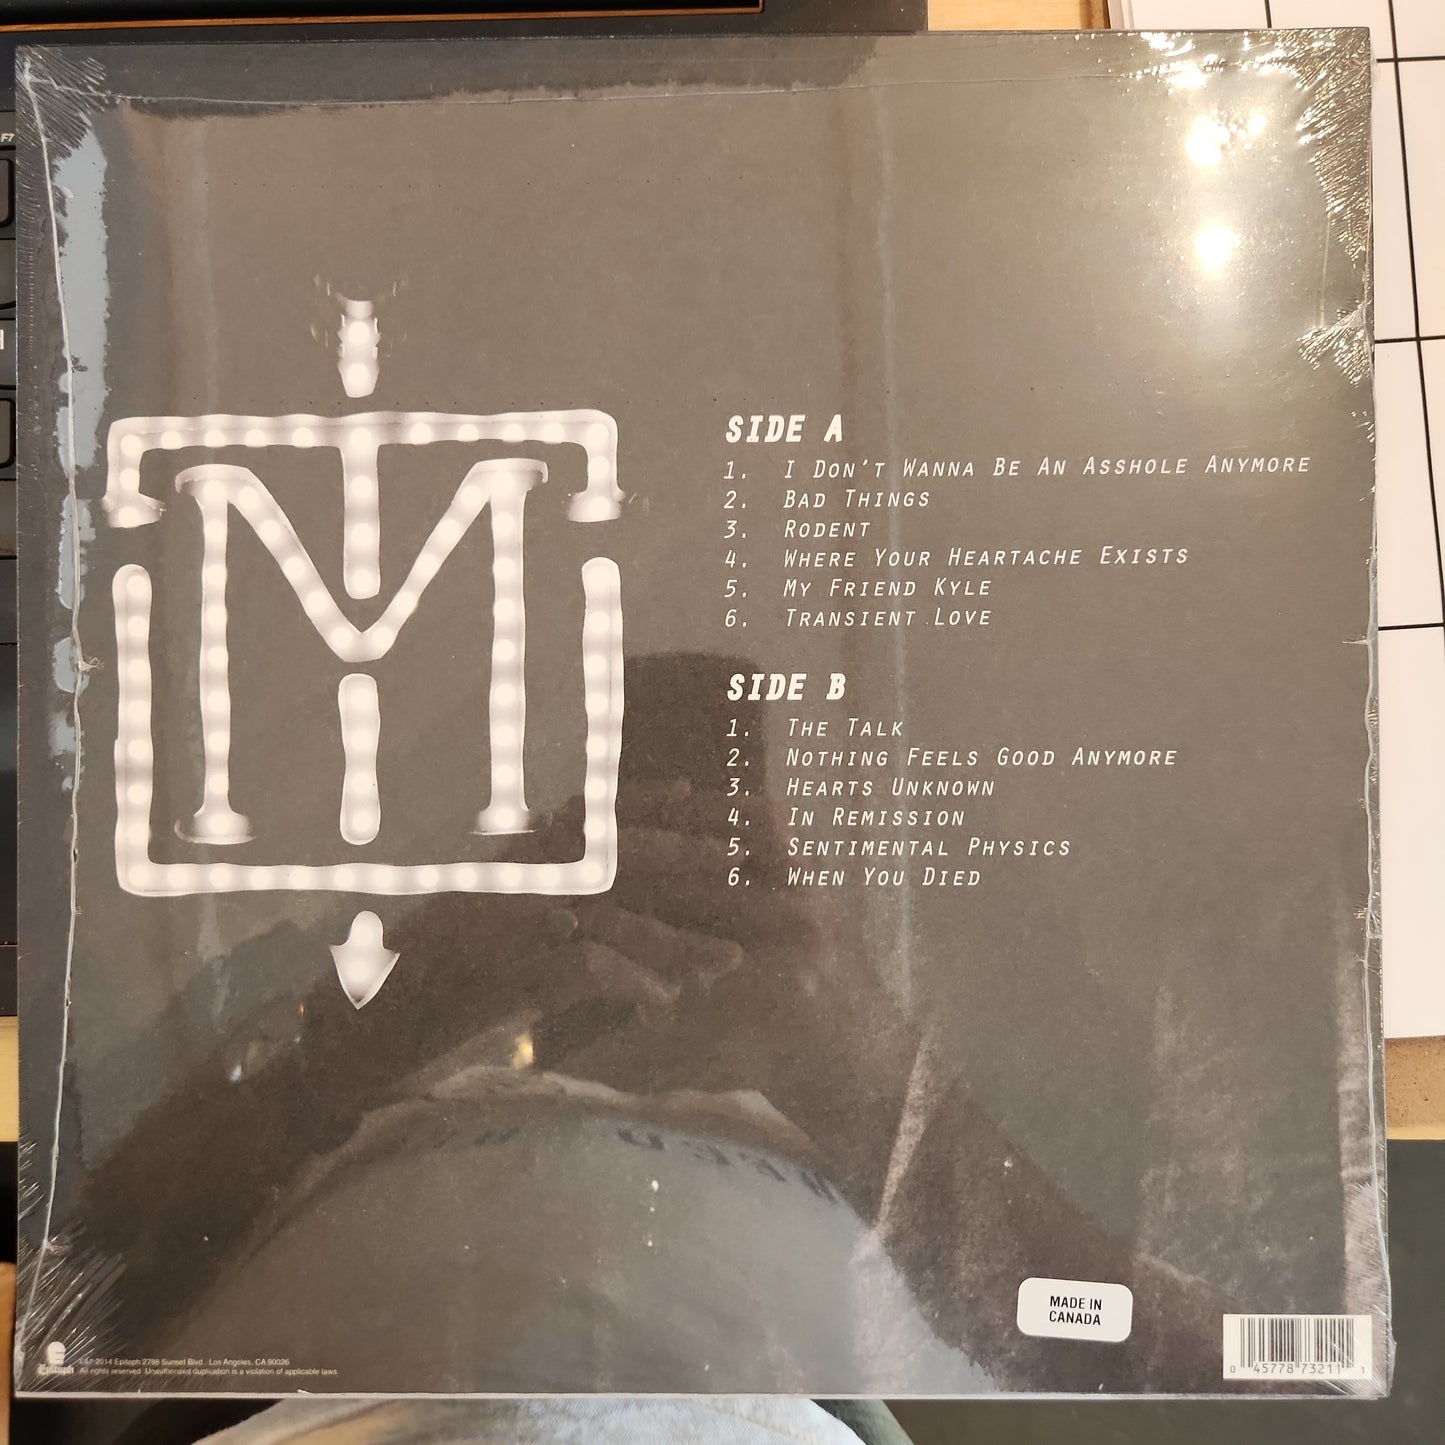 The Menzingers - Rented World - Vinyl  LP